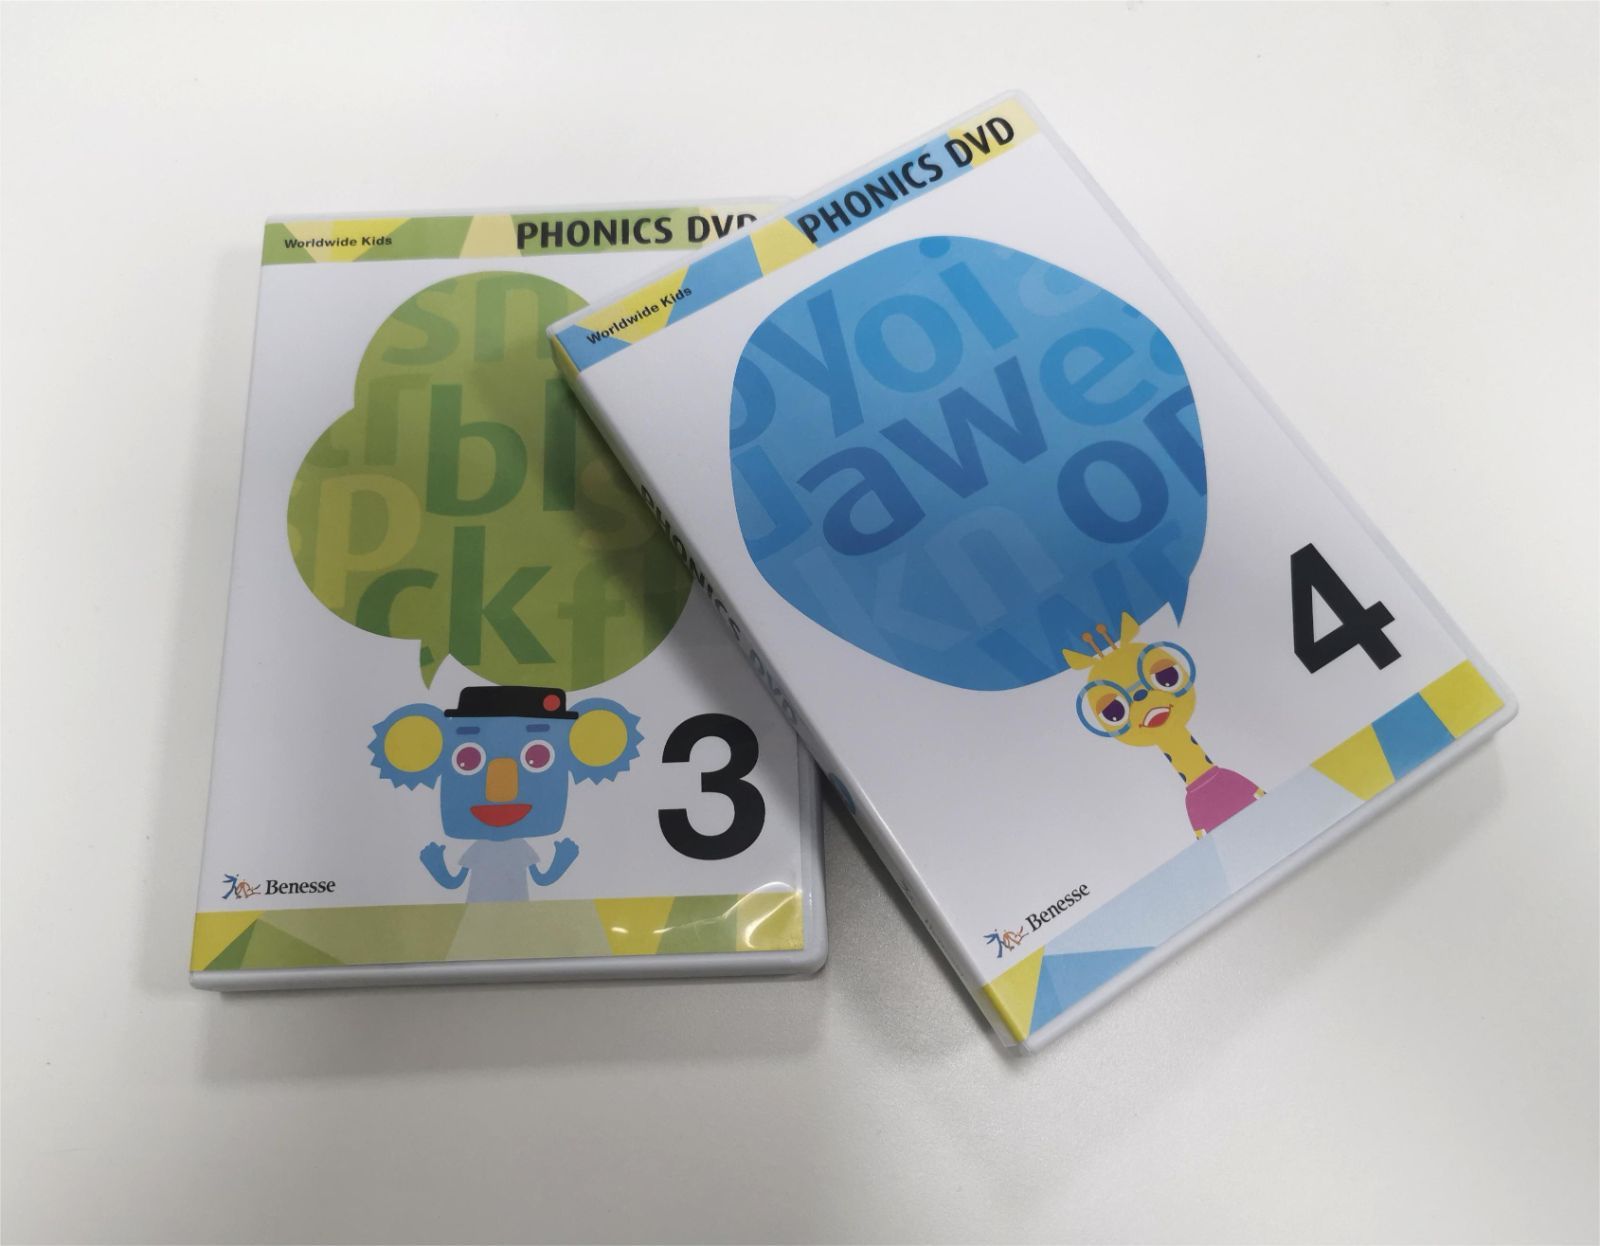 Worldwide Kids PHONICS DVD 3&4CD/DVD収納 - CD/DVD収納